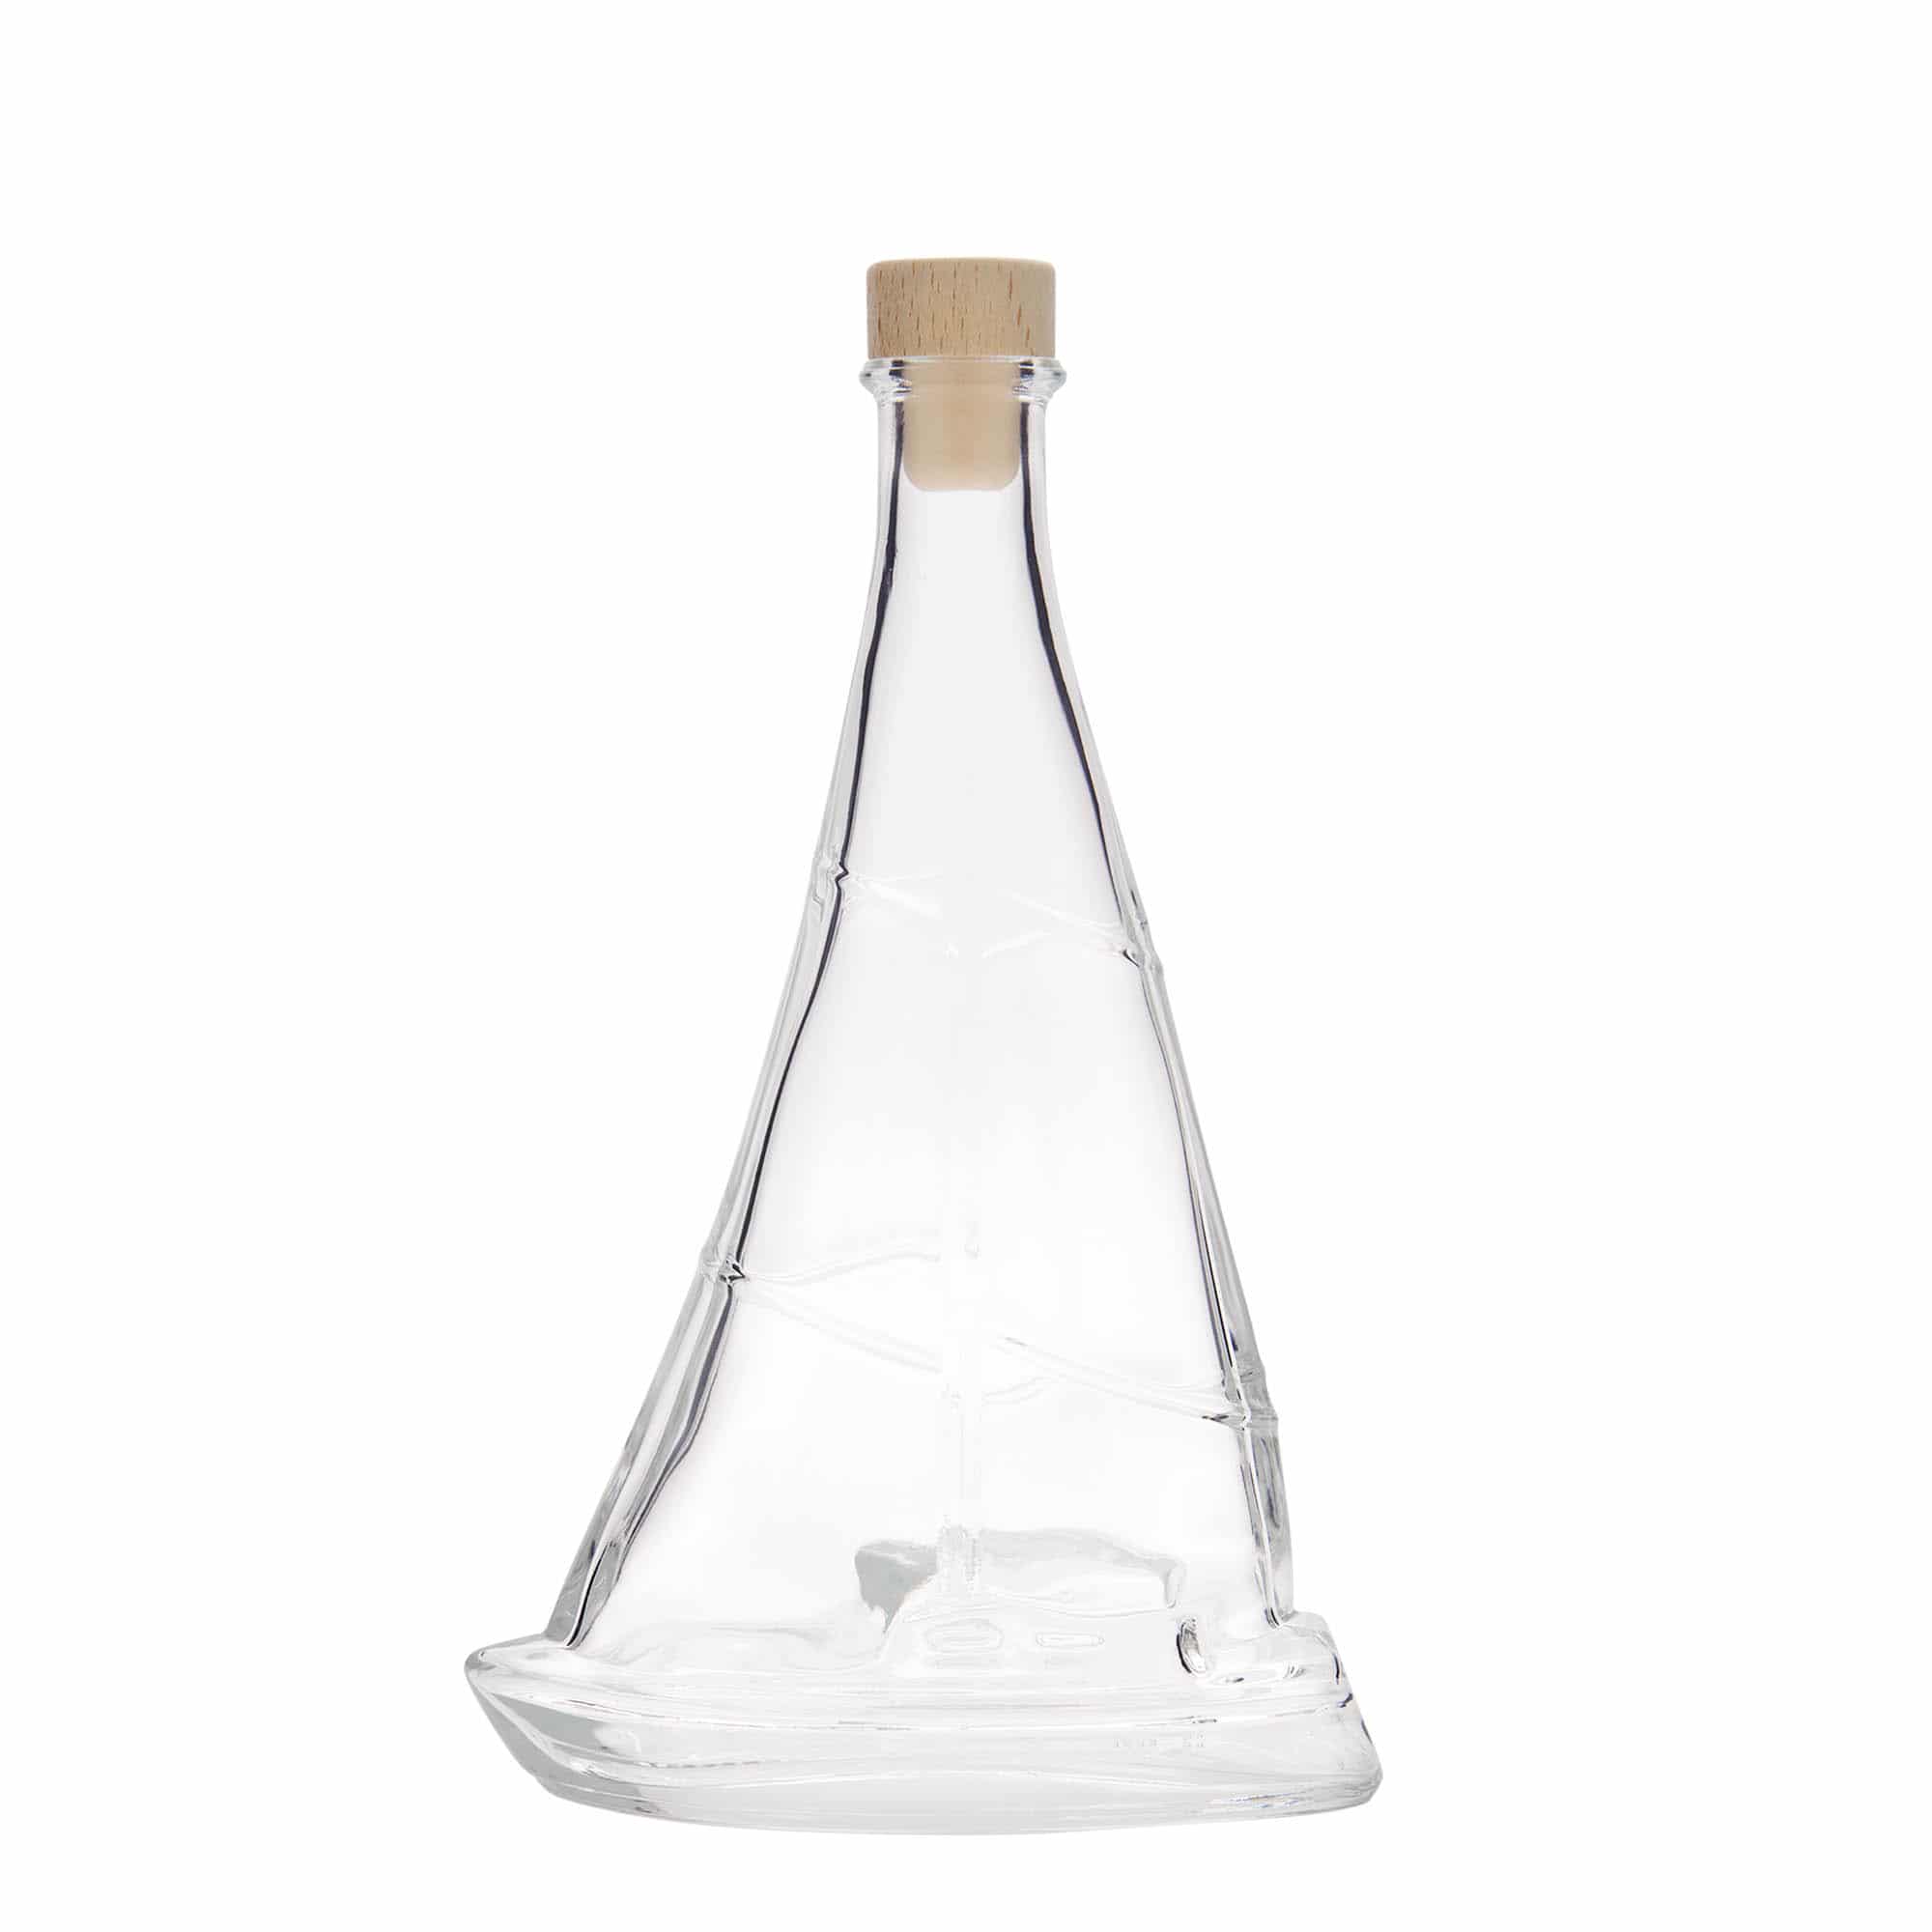 350 ml glass bottle 'Sailboat', closure: cork